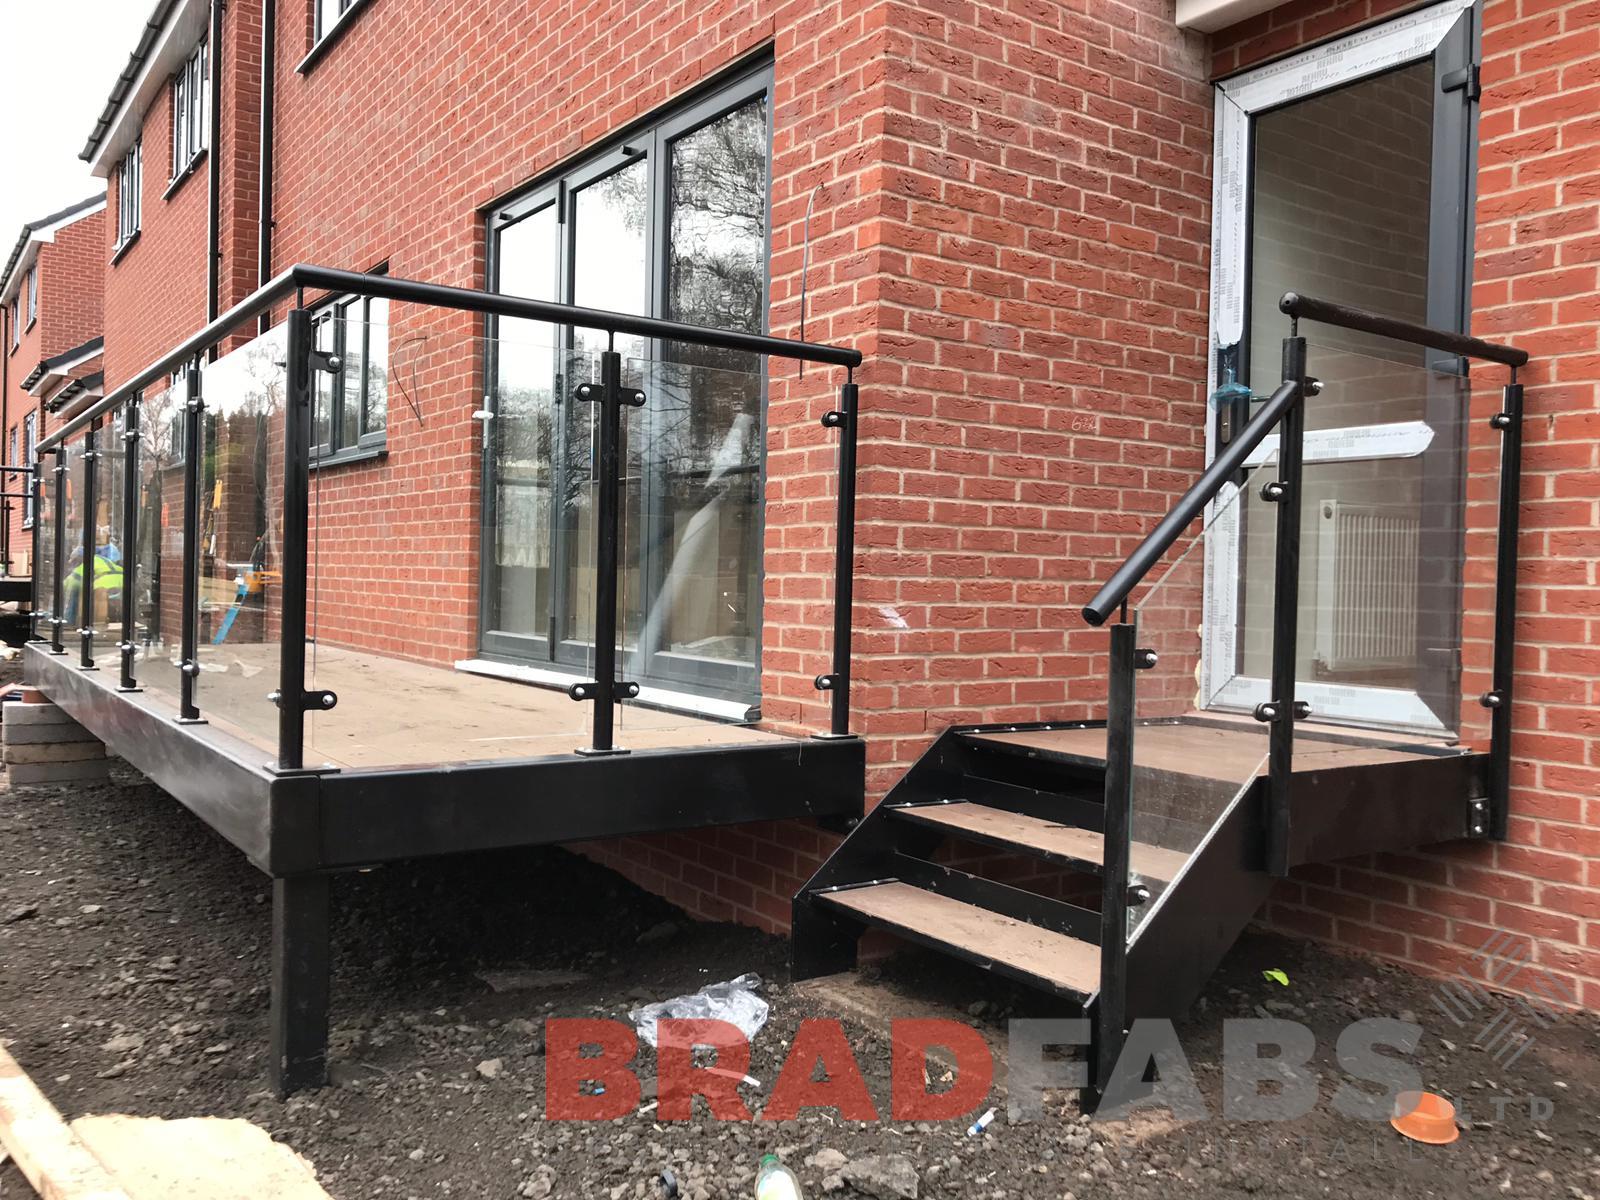 Mild steel balustrade, Galvanised balustrade, Powder coated black balustrade, glass infill panels, external stair and balcony